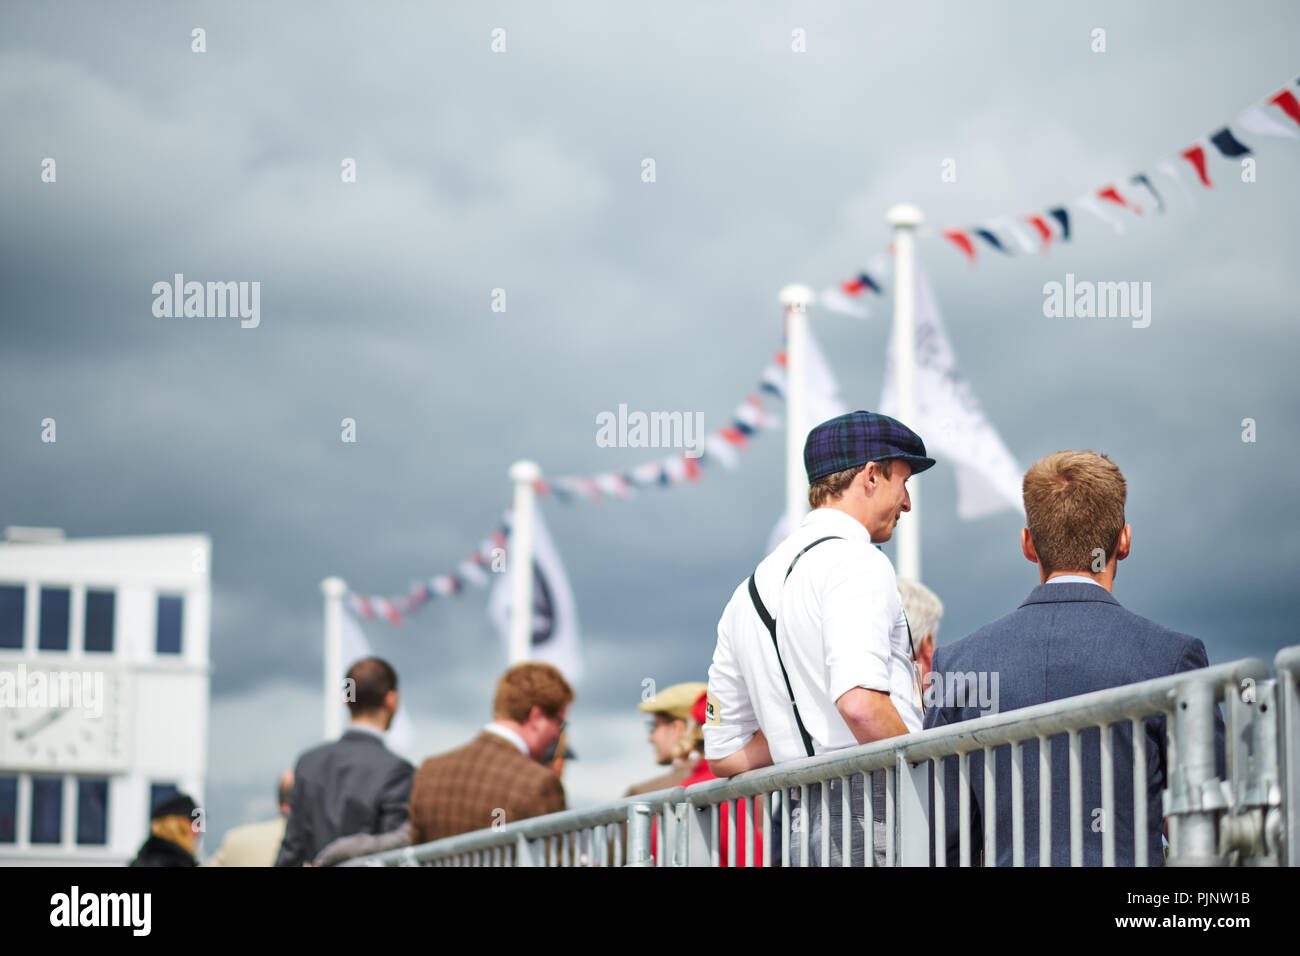 Chichester, West Sussex, UK, 8. September 2018. Menschen in Goodwood während des Goodwood Revival in Goodwood Motor Circuit. Foto: Gergo Toth/Alamy leben Nachrichten Stockfoto